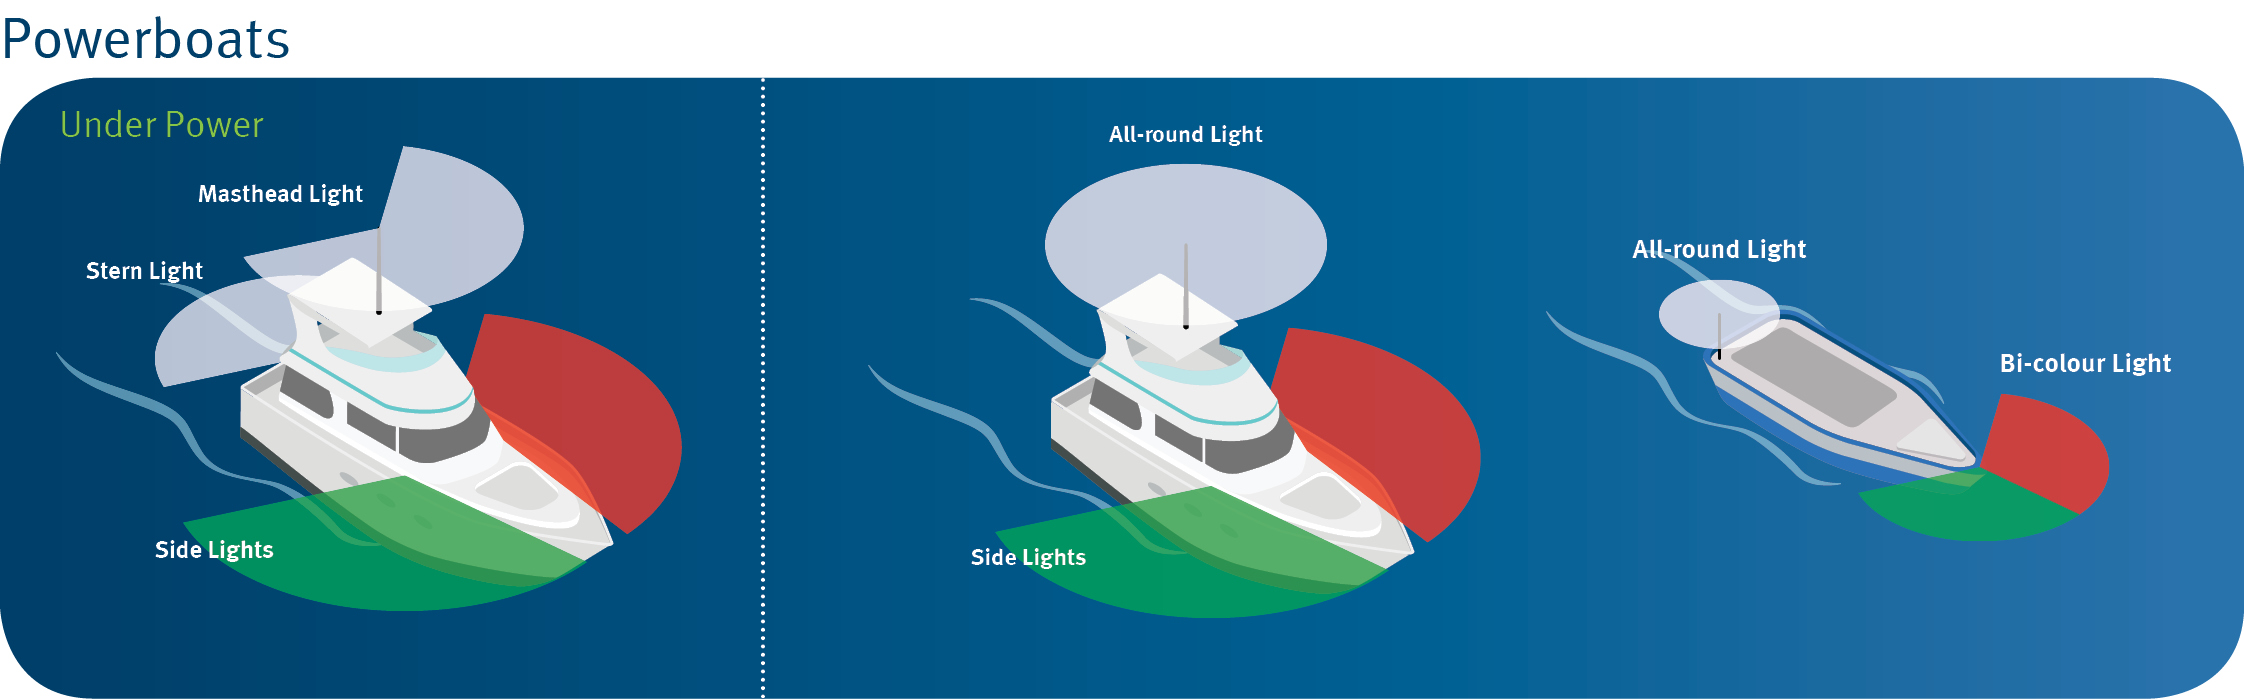 (2pcs=red+green) LED Marine Navigation Lights for Boats - Bow Light Port  Starboard Side * Lamp for Pontoon, Skeeter, Power Boat and Skiff - 10-30